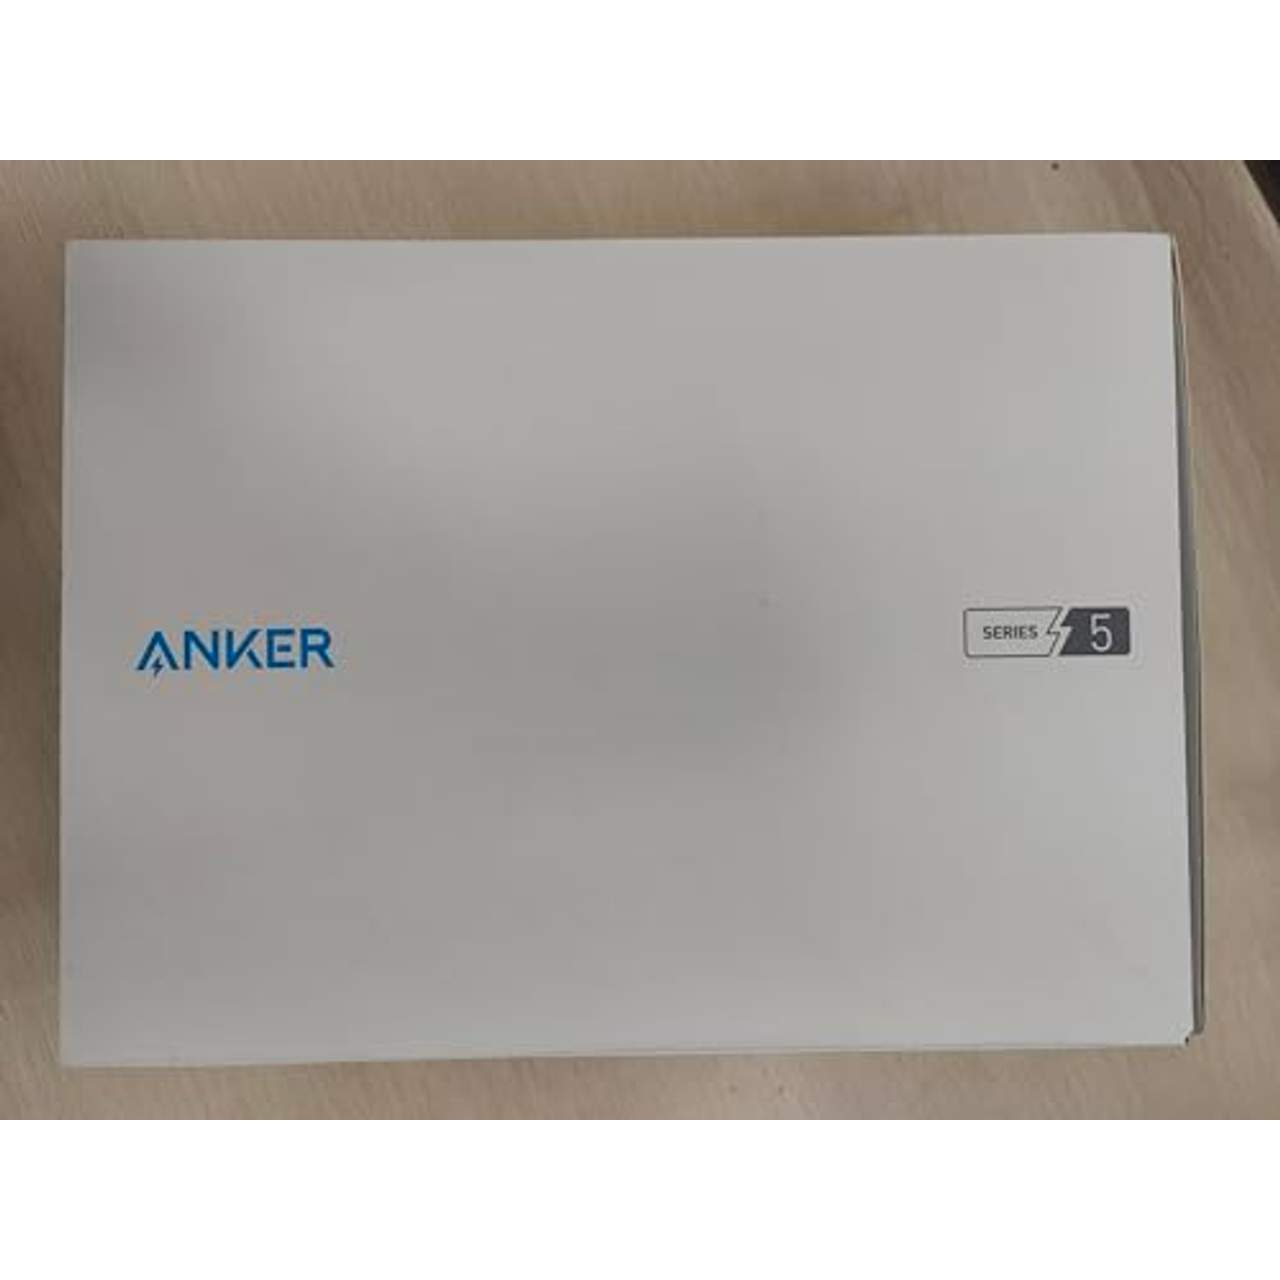 Anker 548 Powerbank